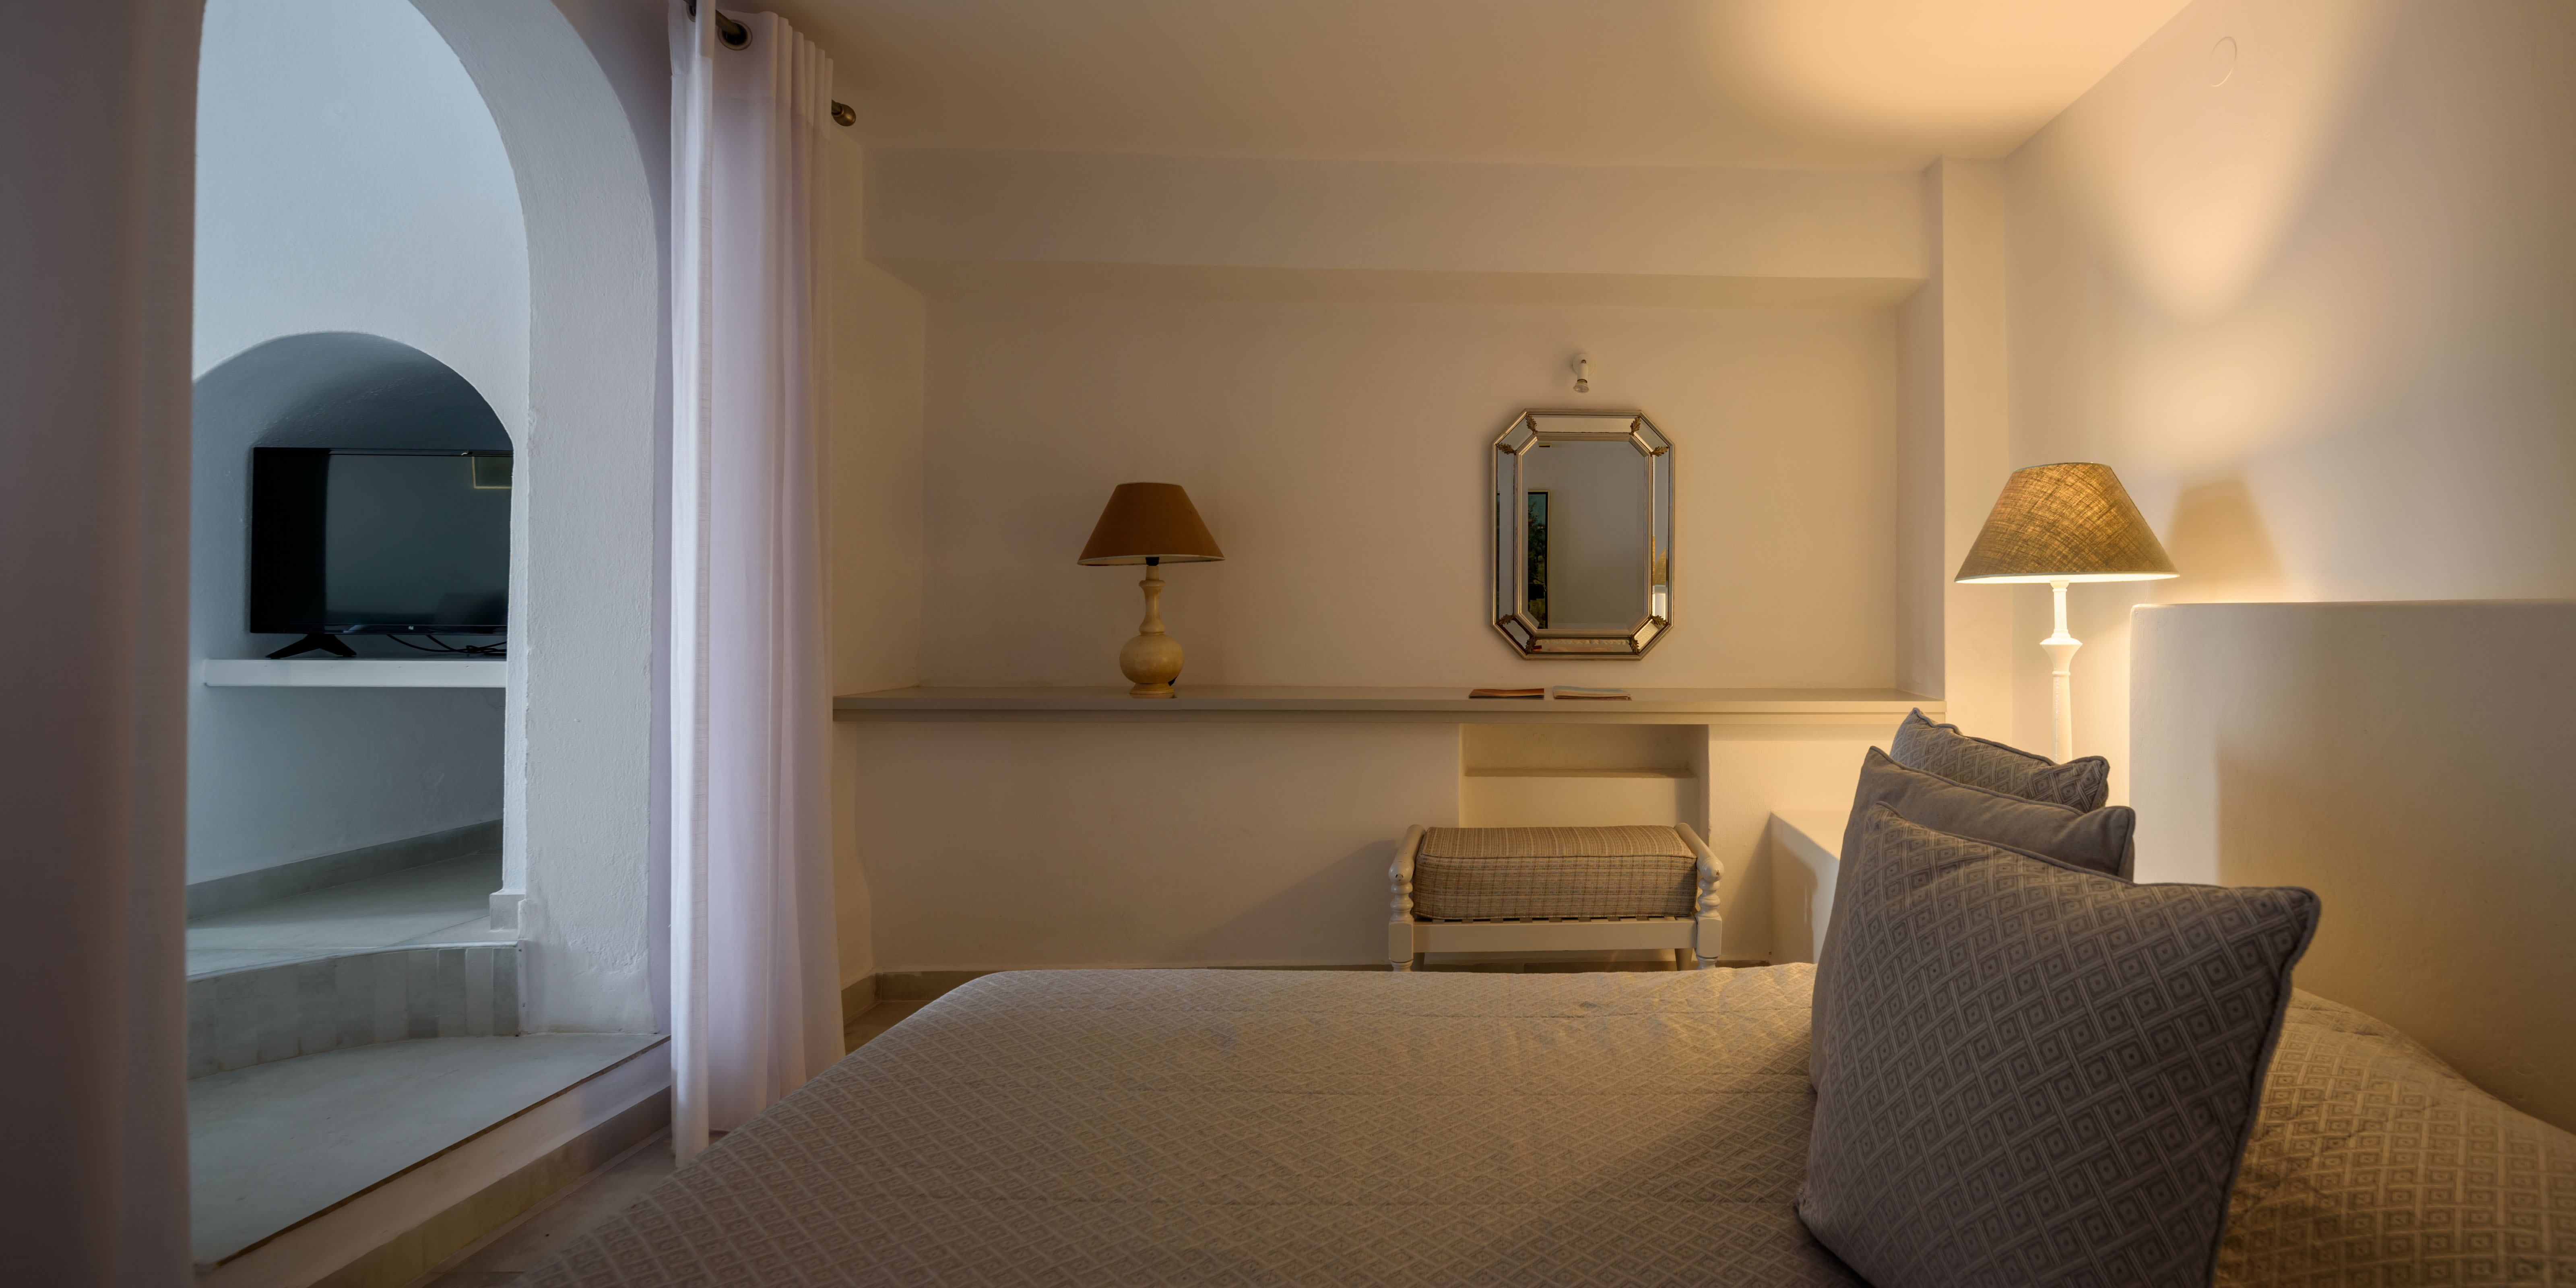 Andromeda Villas Hotel and Spa in Santorini island